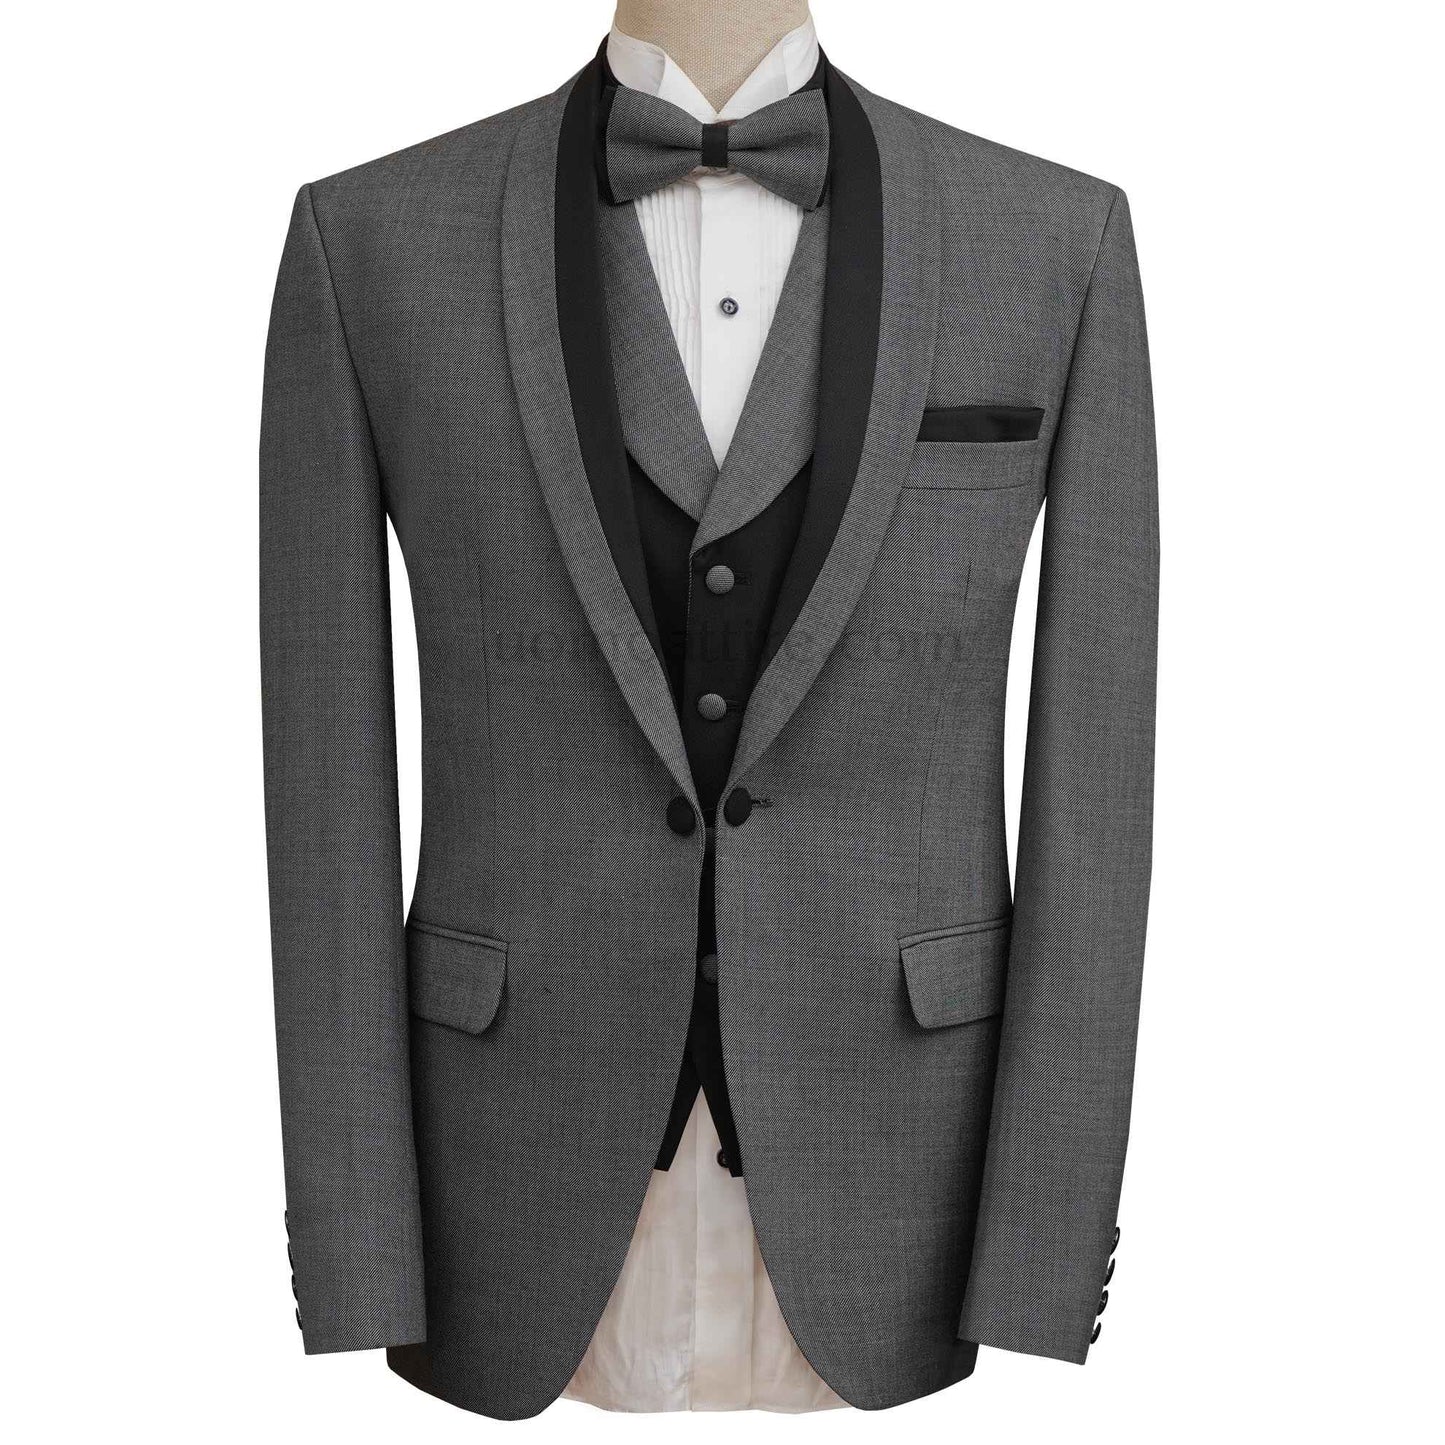 Men's three piece gray tuxedo with contrast shawl, suit, 3 piece suit, gray tuxedo suit